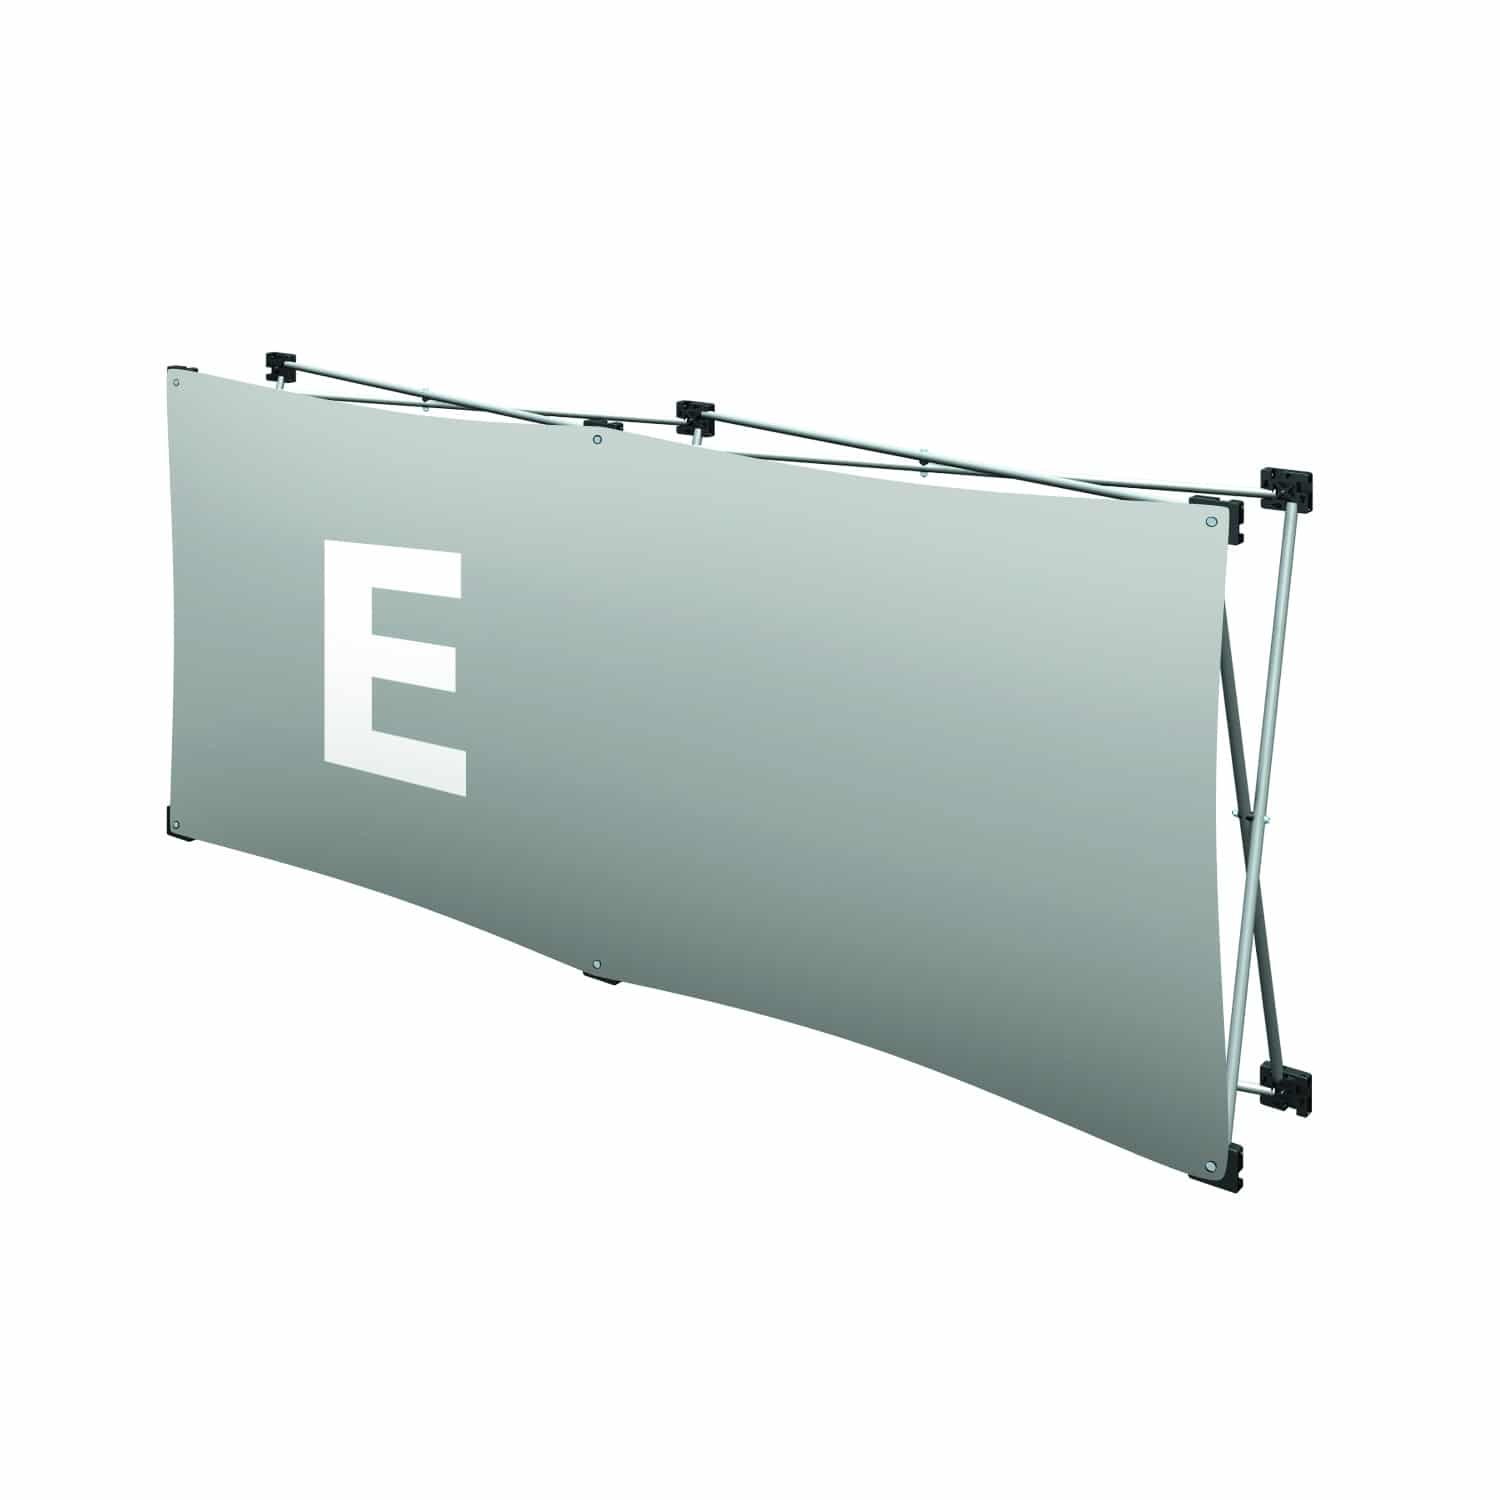 Replacement 2 Quad Graphic Panel E for Micro Geometrix tabletop exhibit displays